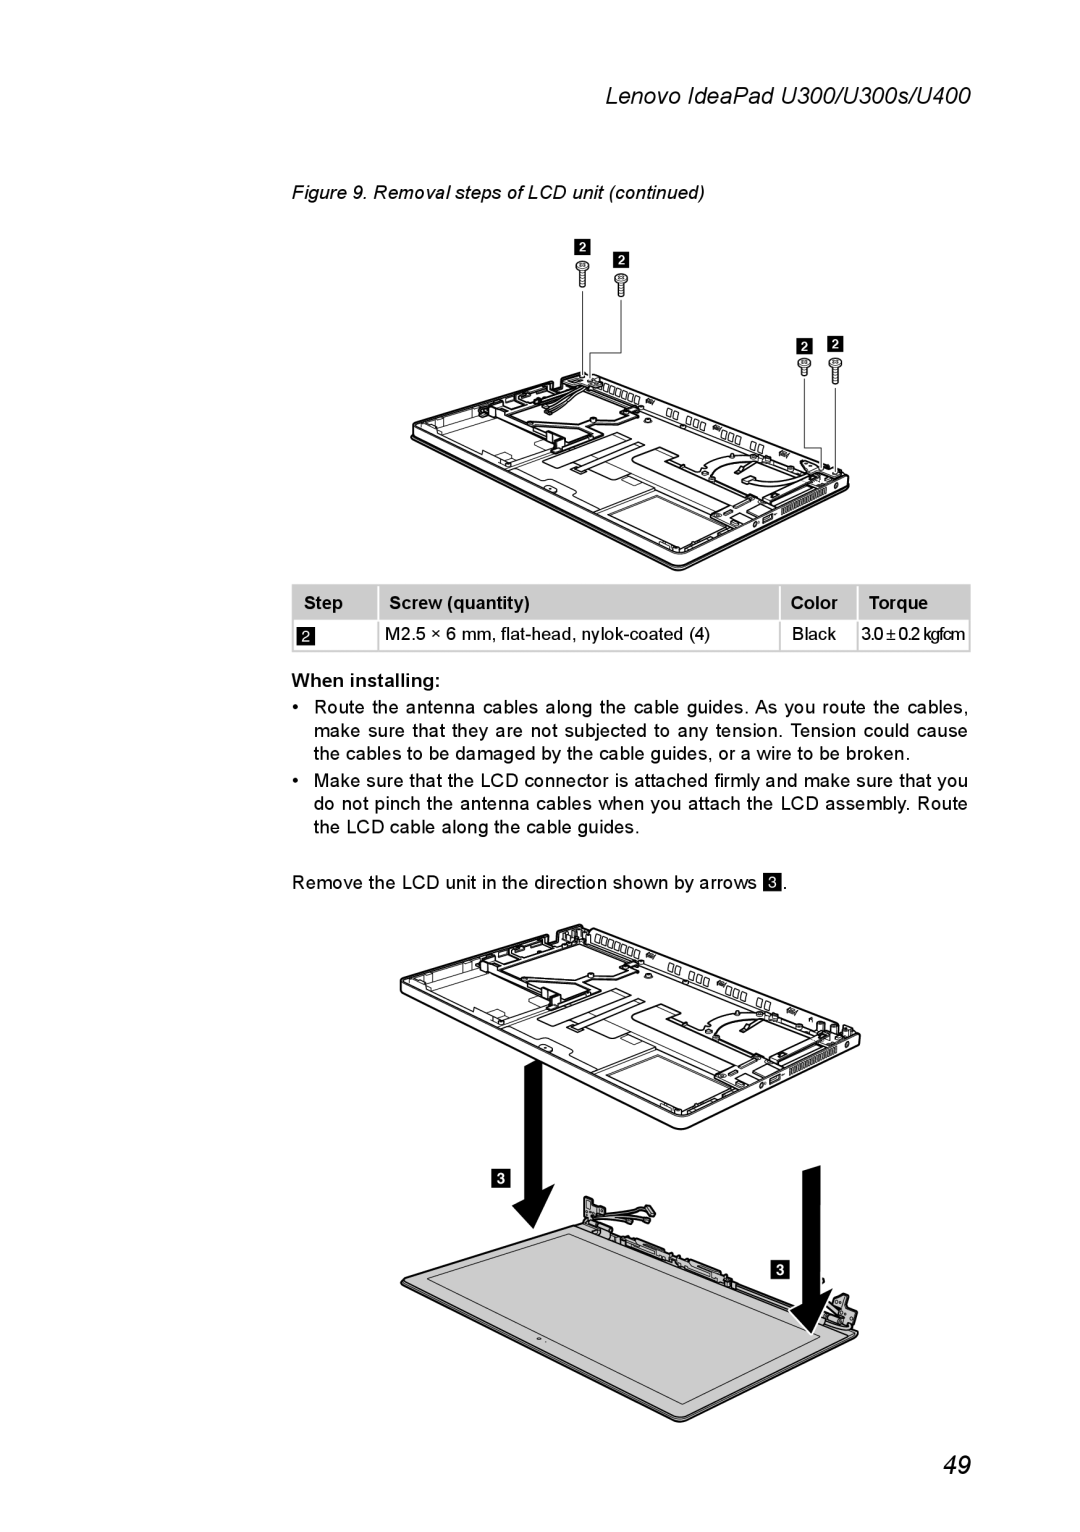 Lenovo U300S manual Removal steps of LCD unit continued, Lenovo IdeaPad U300/U300s/U400, When installing 